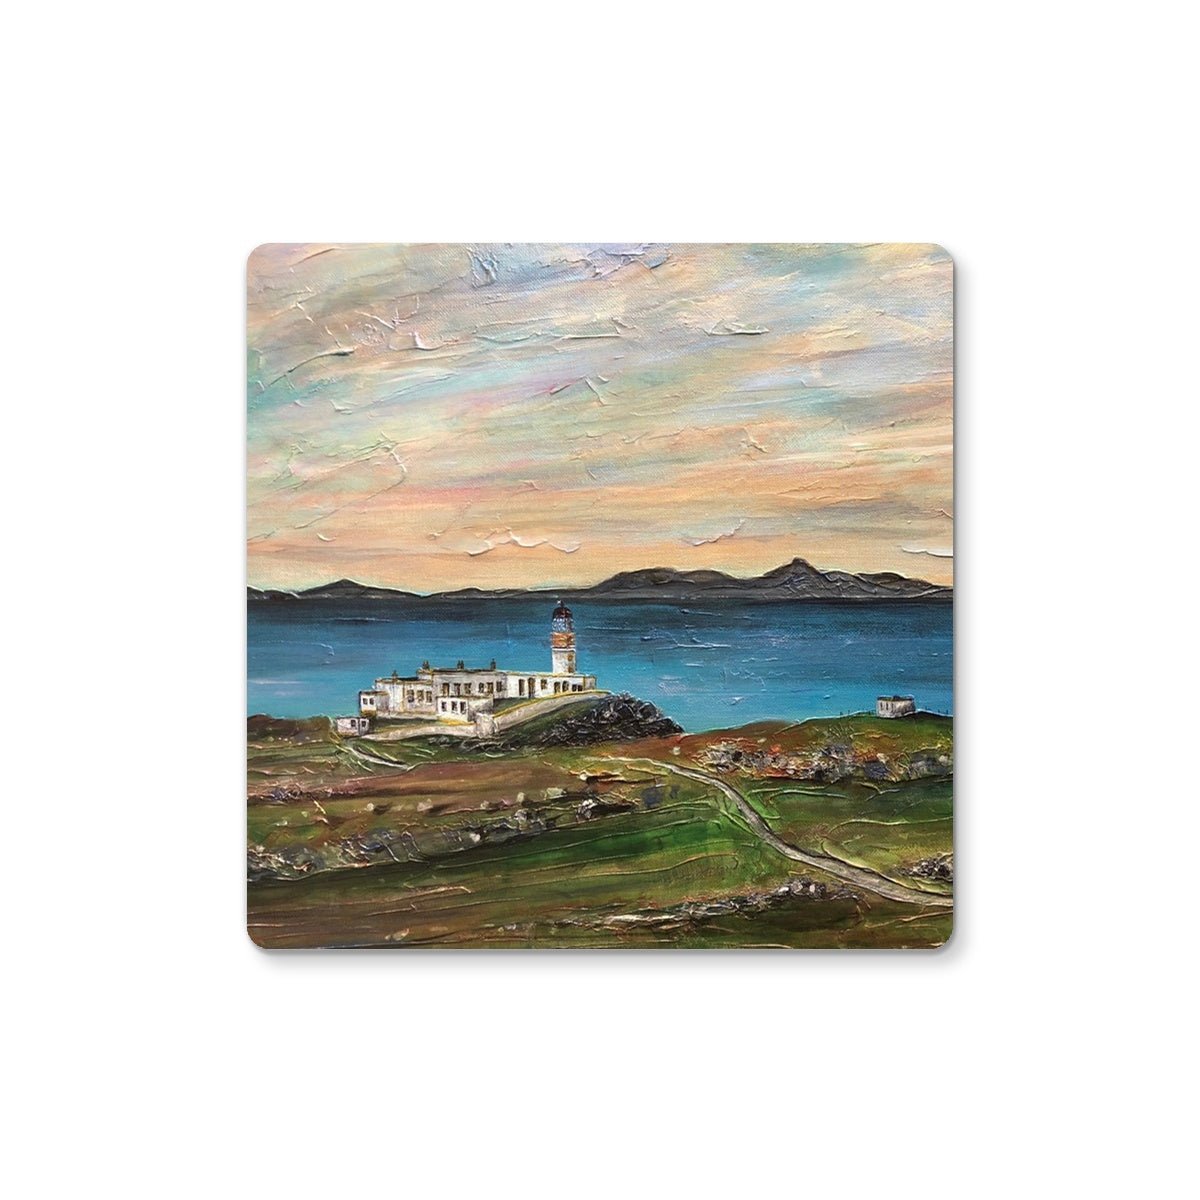 Neist Point Skye Art Gifts Coaster-Coasters-Skye Art Gallery-Single Coaster-Paintings, Prints, Homeware, Art Gifts From Scotland By Scottish Artist Kevin Hunter